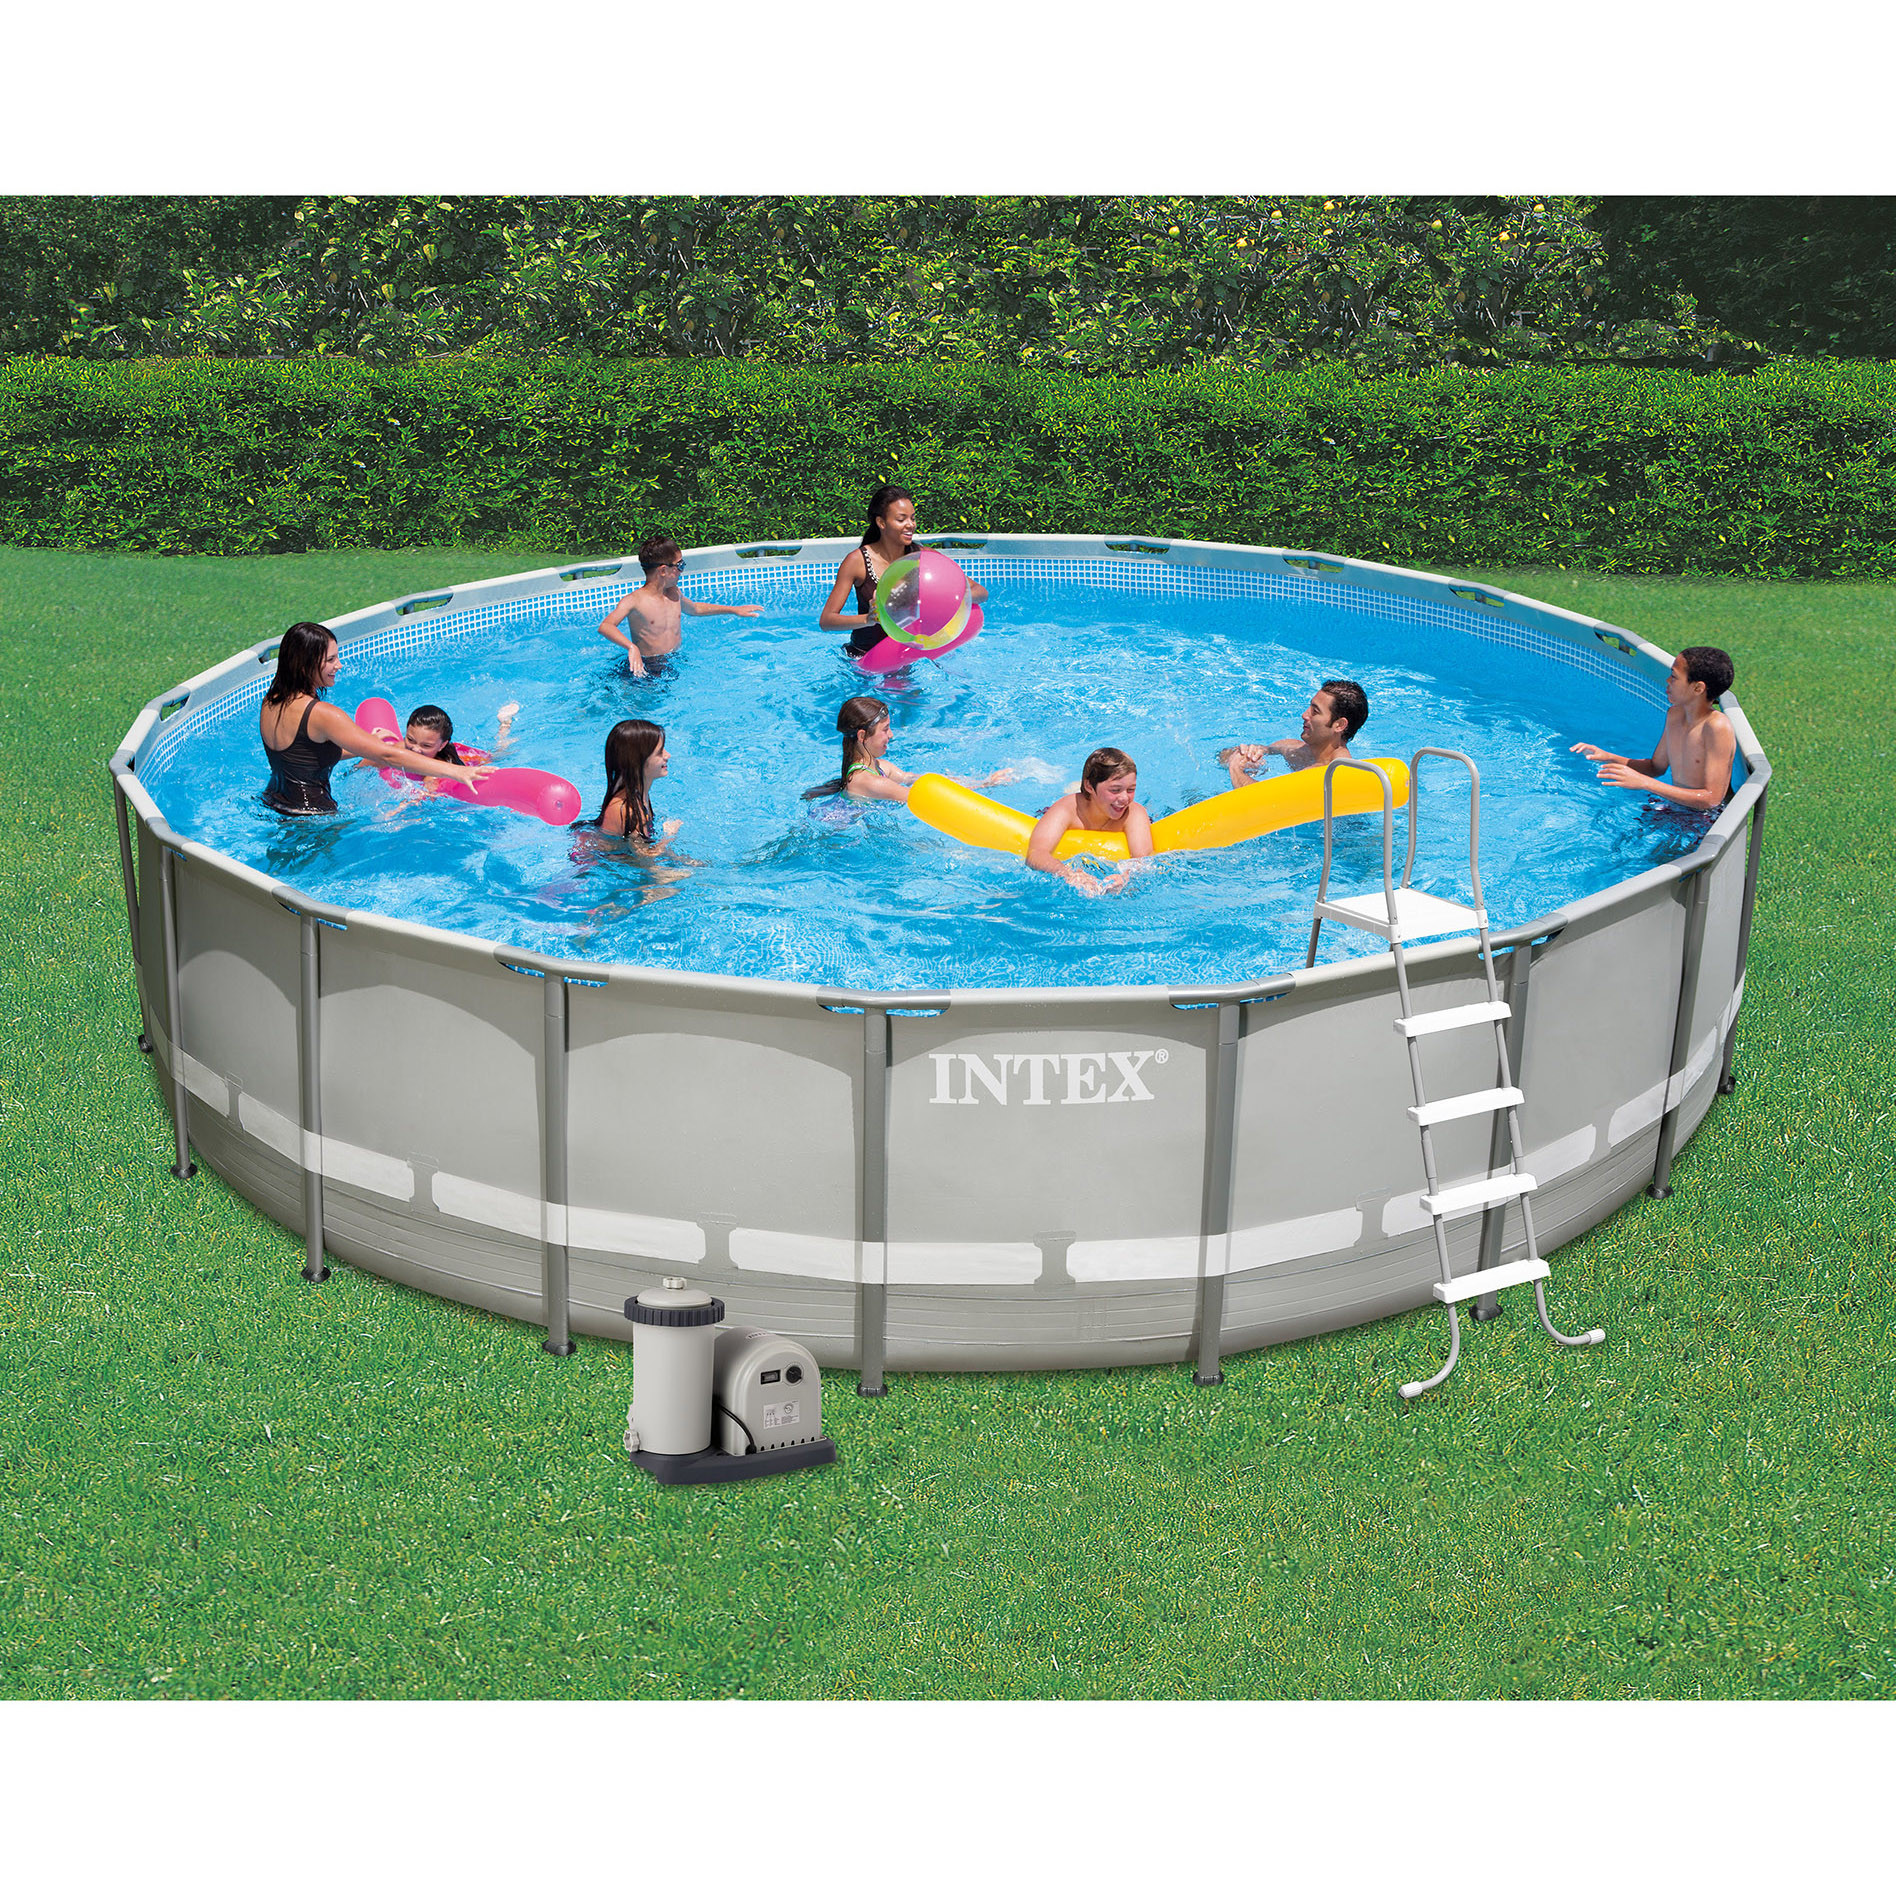 Intex Above Ground Pool
 Intex 24 x 52" Ultra Frame Ground Swimming Pool Set